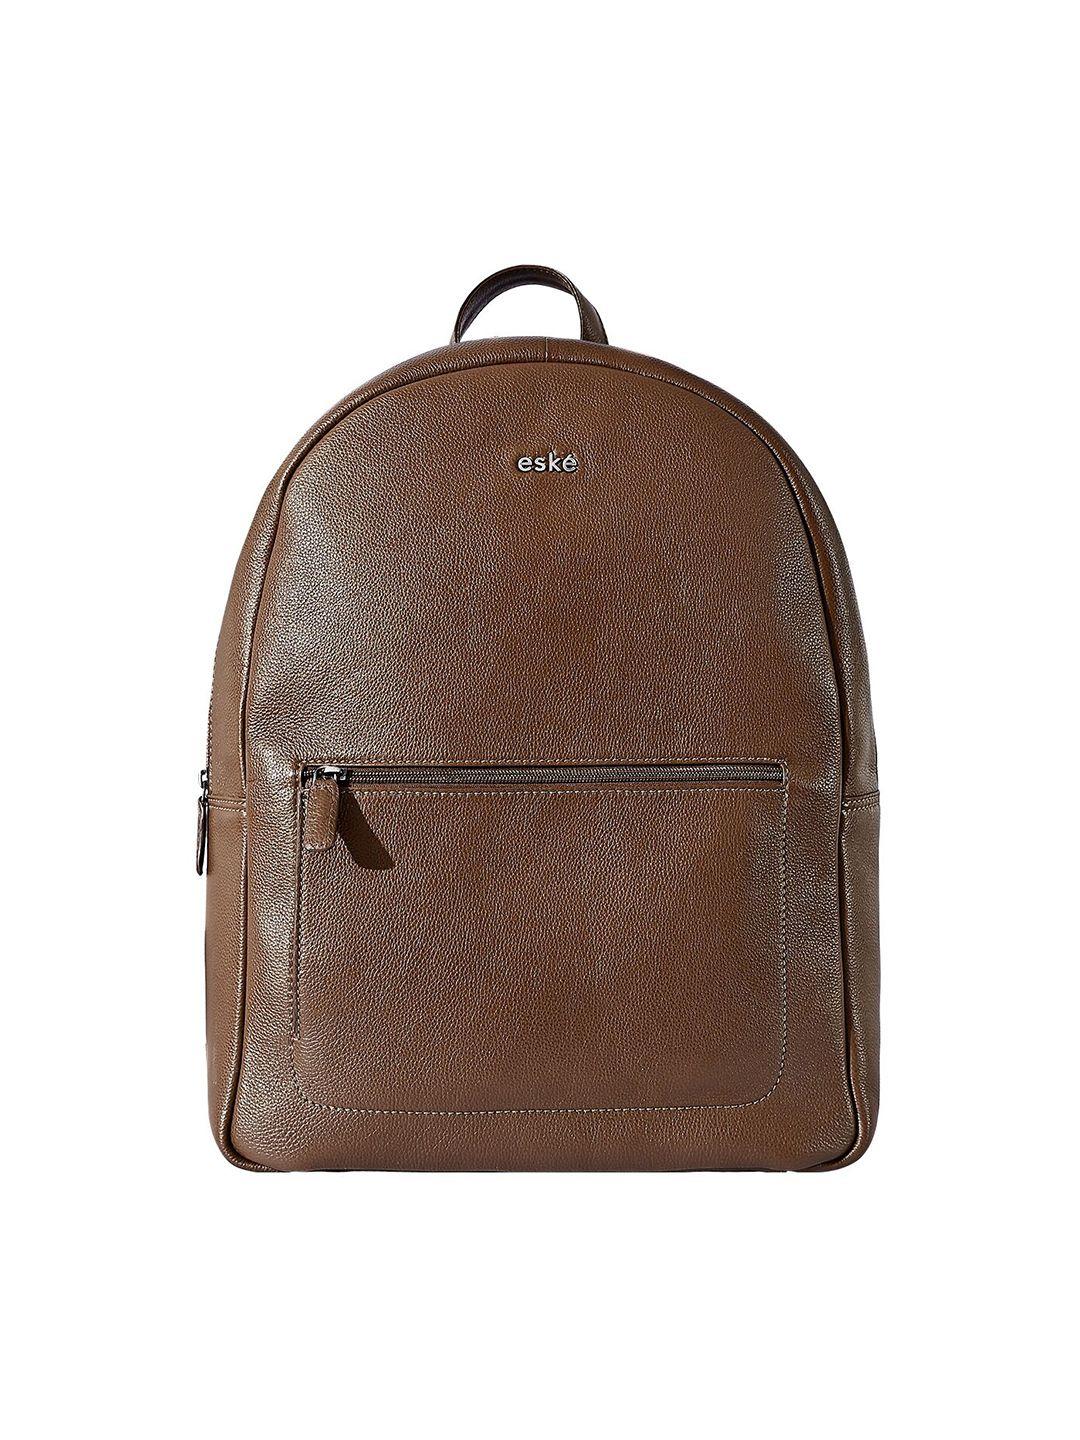 eske leather padded backpack